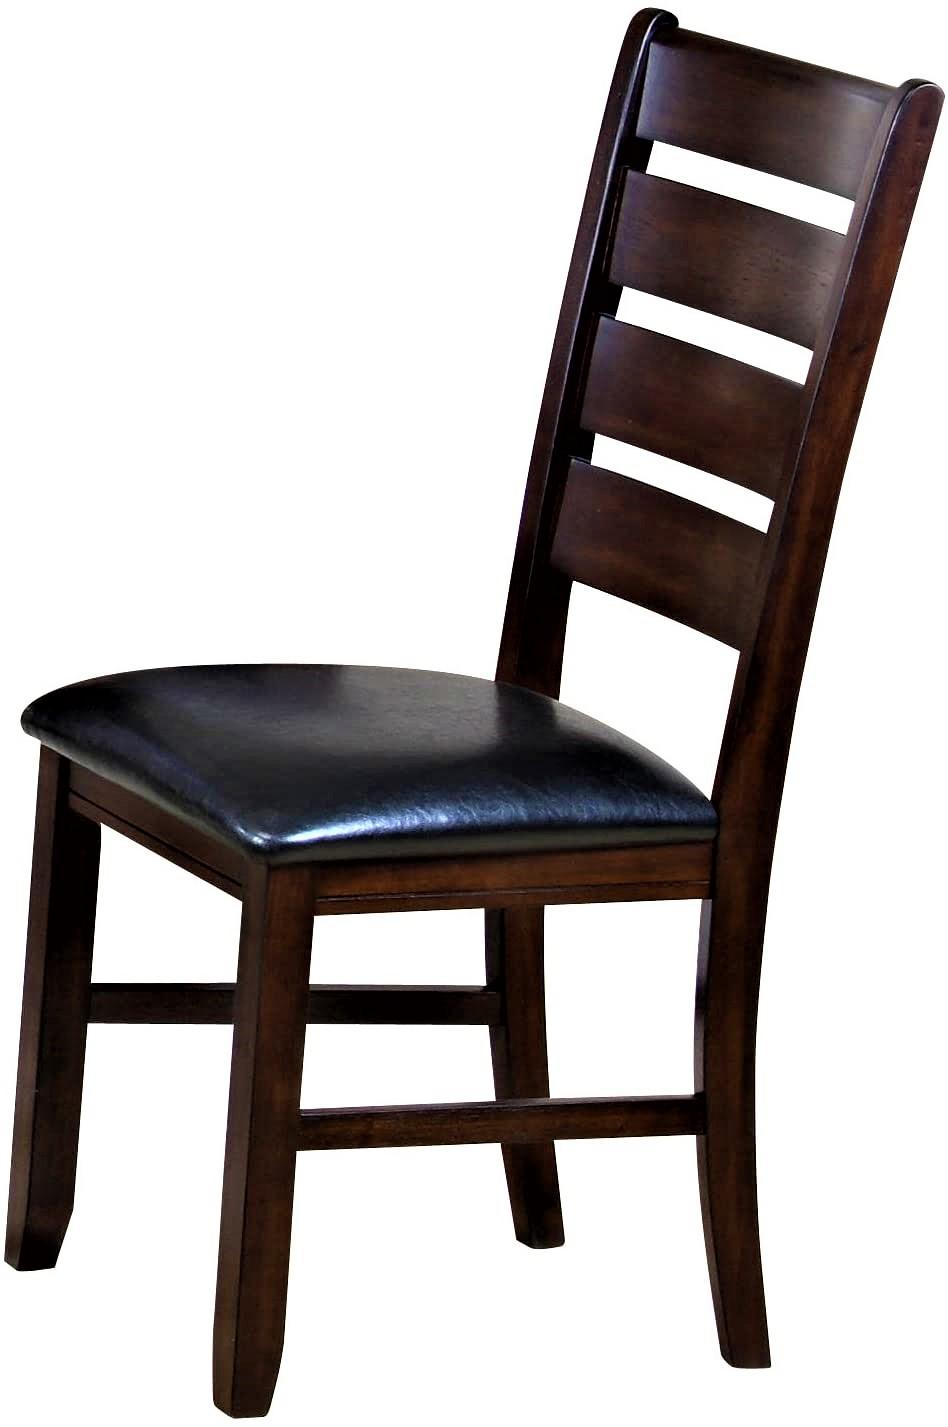 Transitional, Rustic Dining Chair Set Urbana 74624-2pcs in Espresso PU